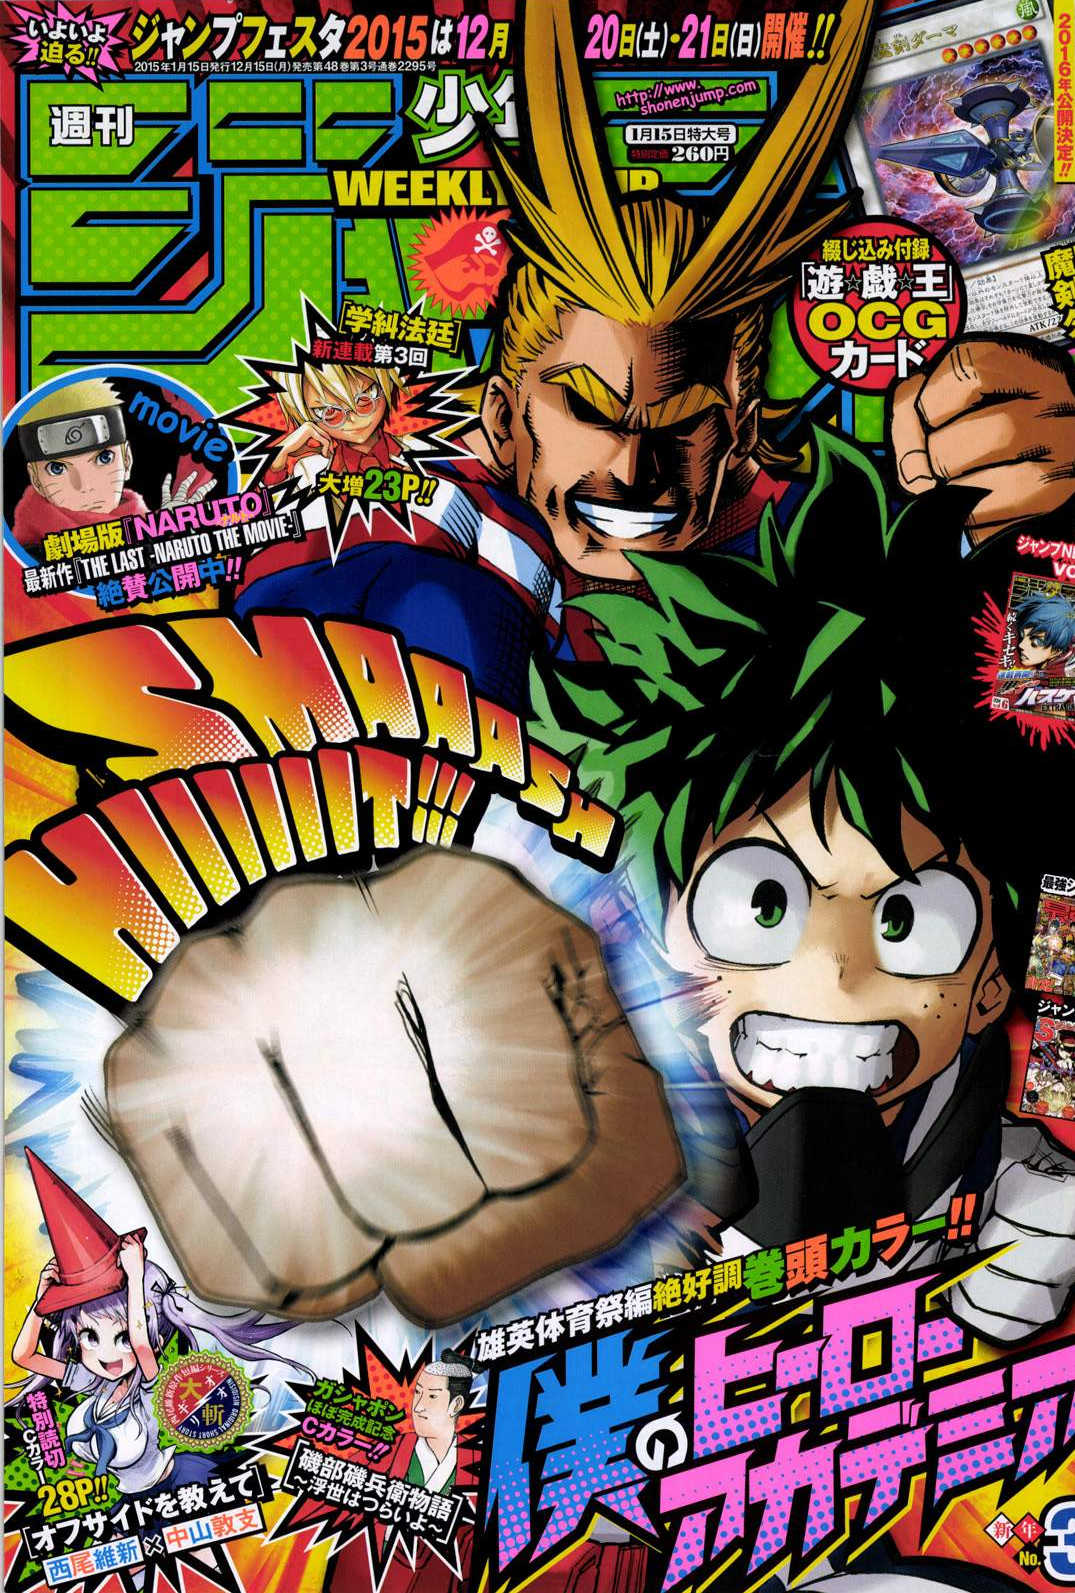 Weekly Shōnen Jump 15 Issue 3 Promotional Card Yugipedia Yu Gi Oh Wiki